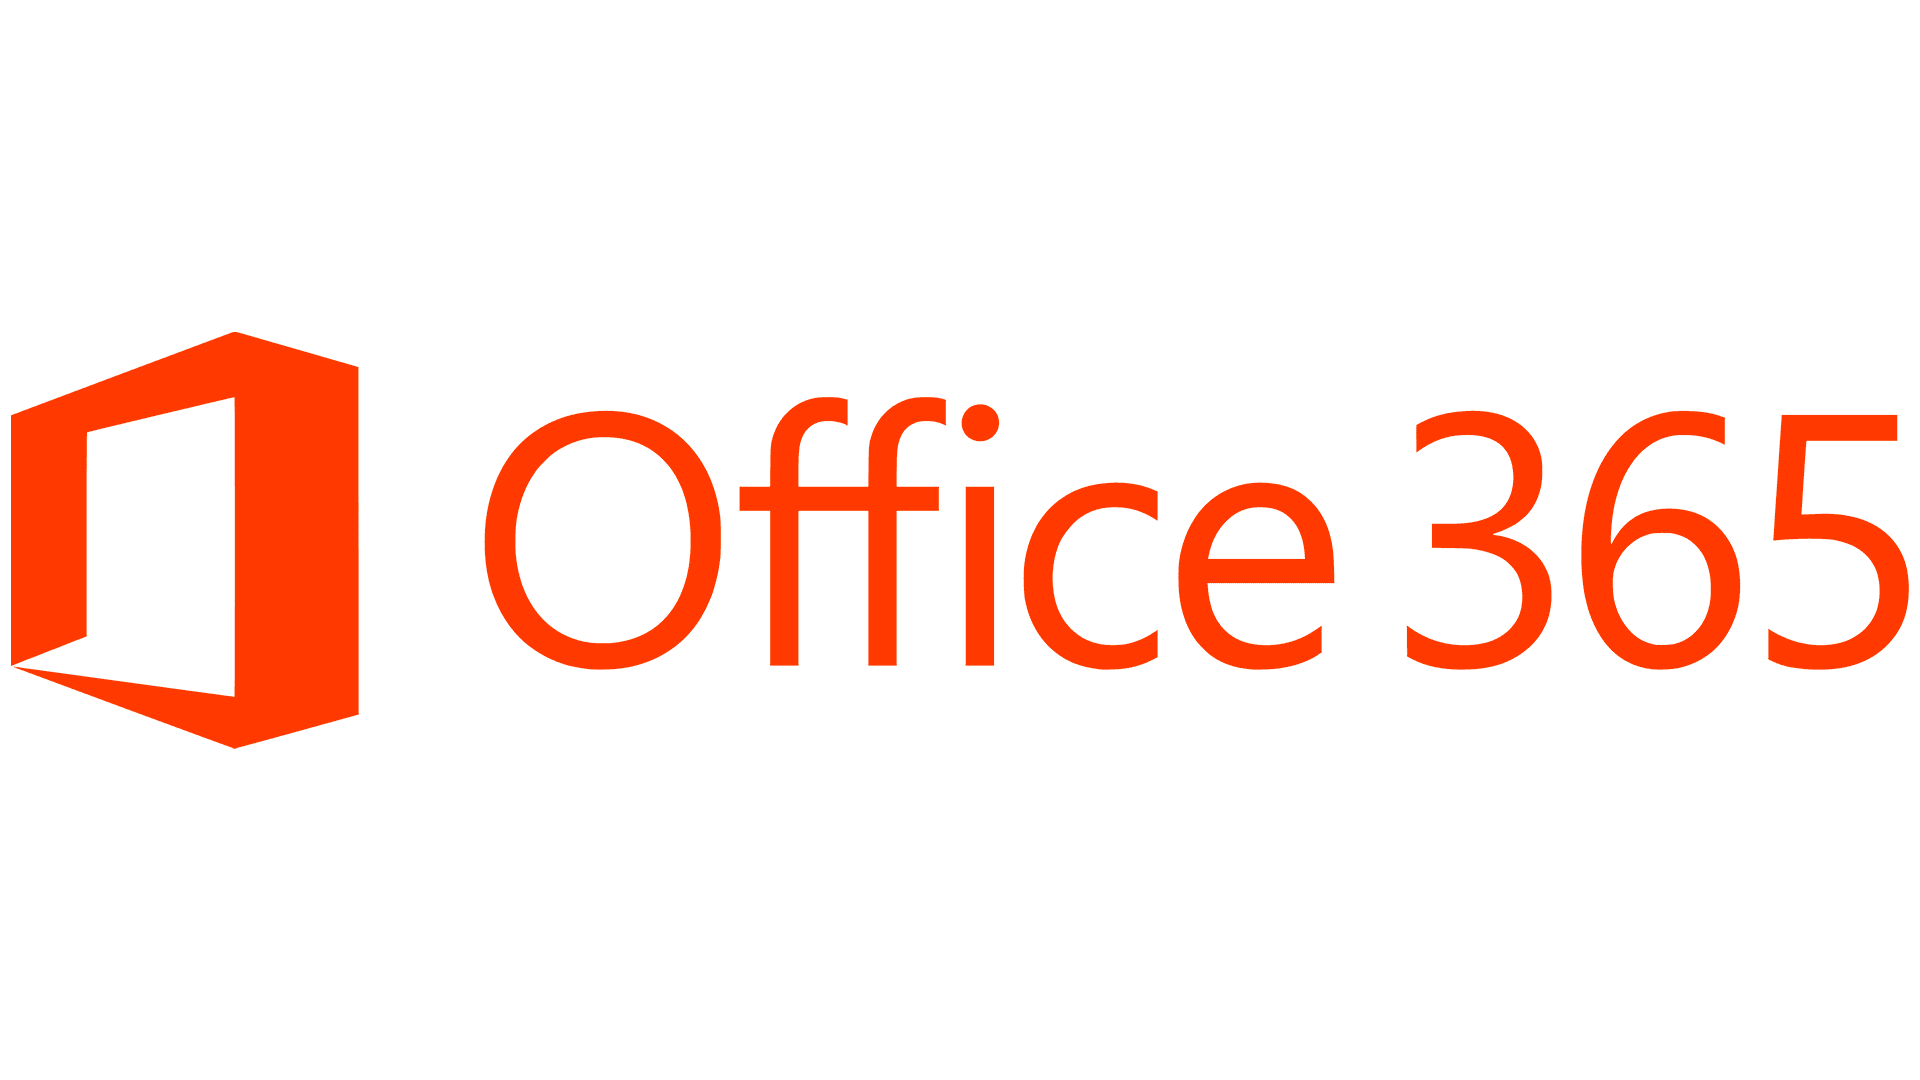 office 365 94fbr